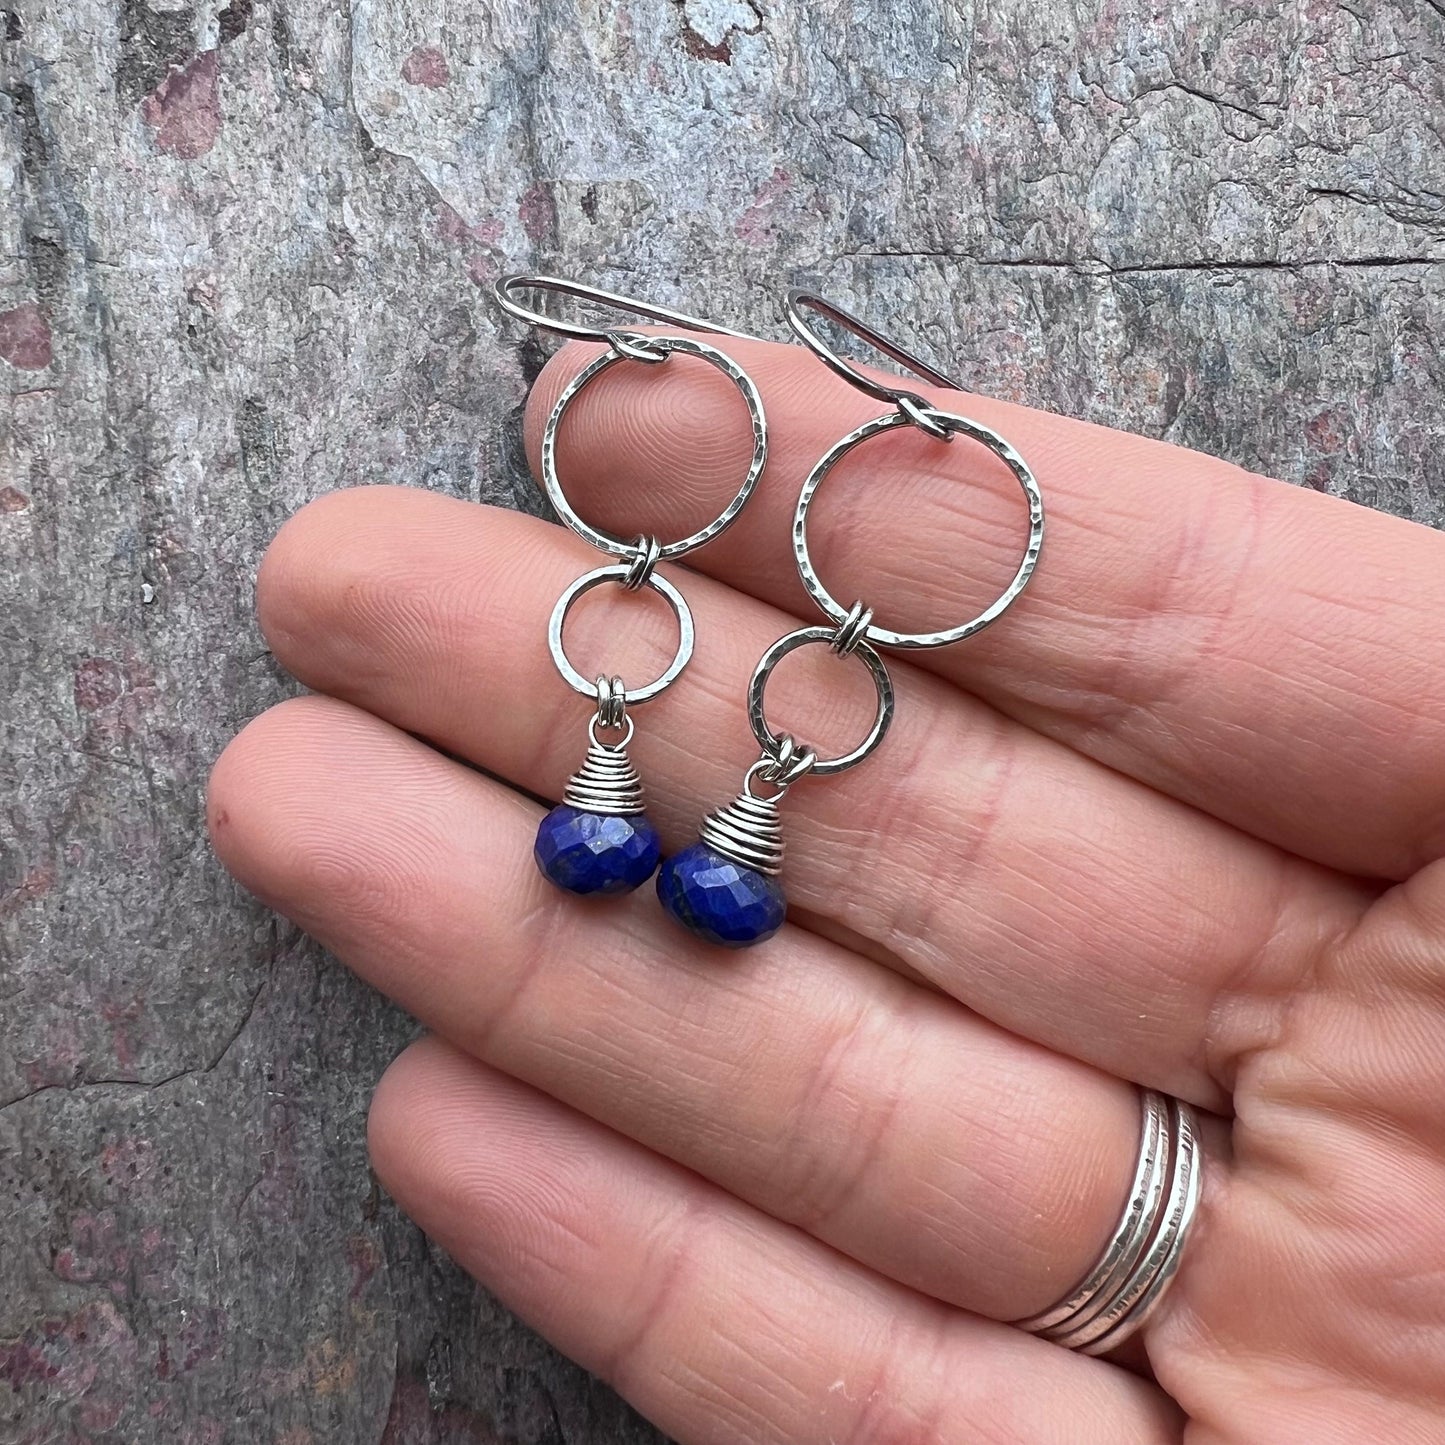 Lapis Lazuli Sterling Silver Earrings - Genuine Lapis Lazuli on Hammered Sterling Silver Circles